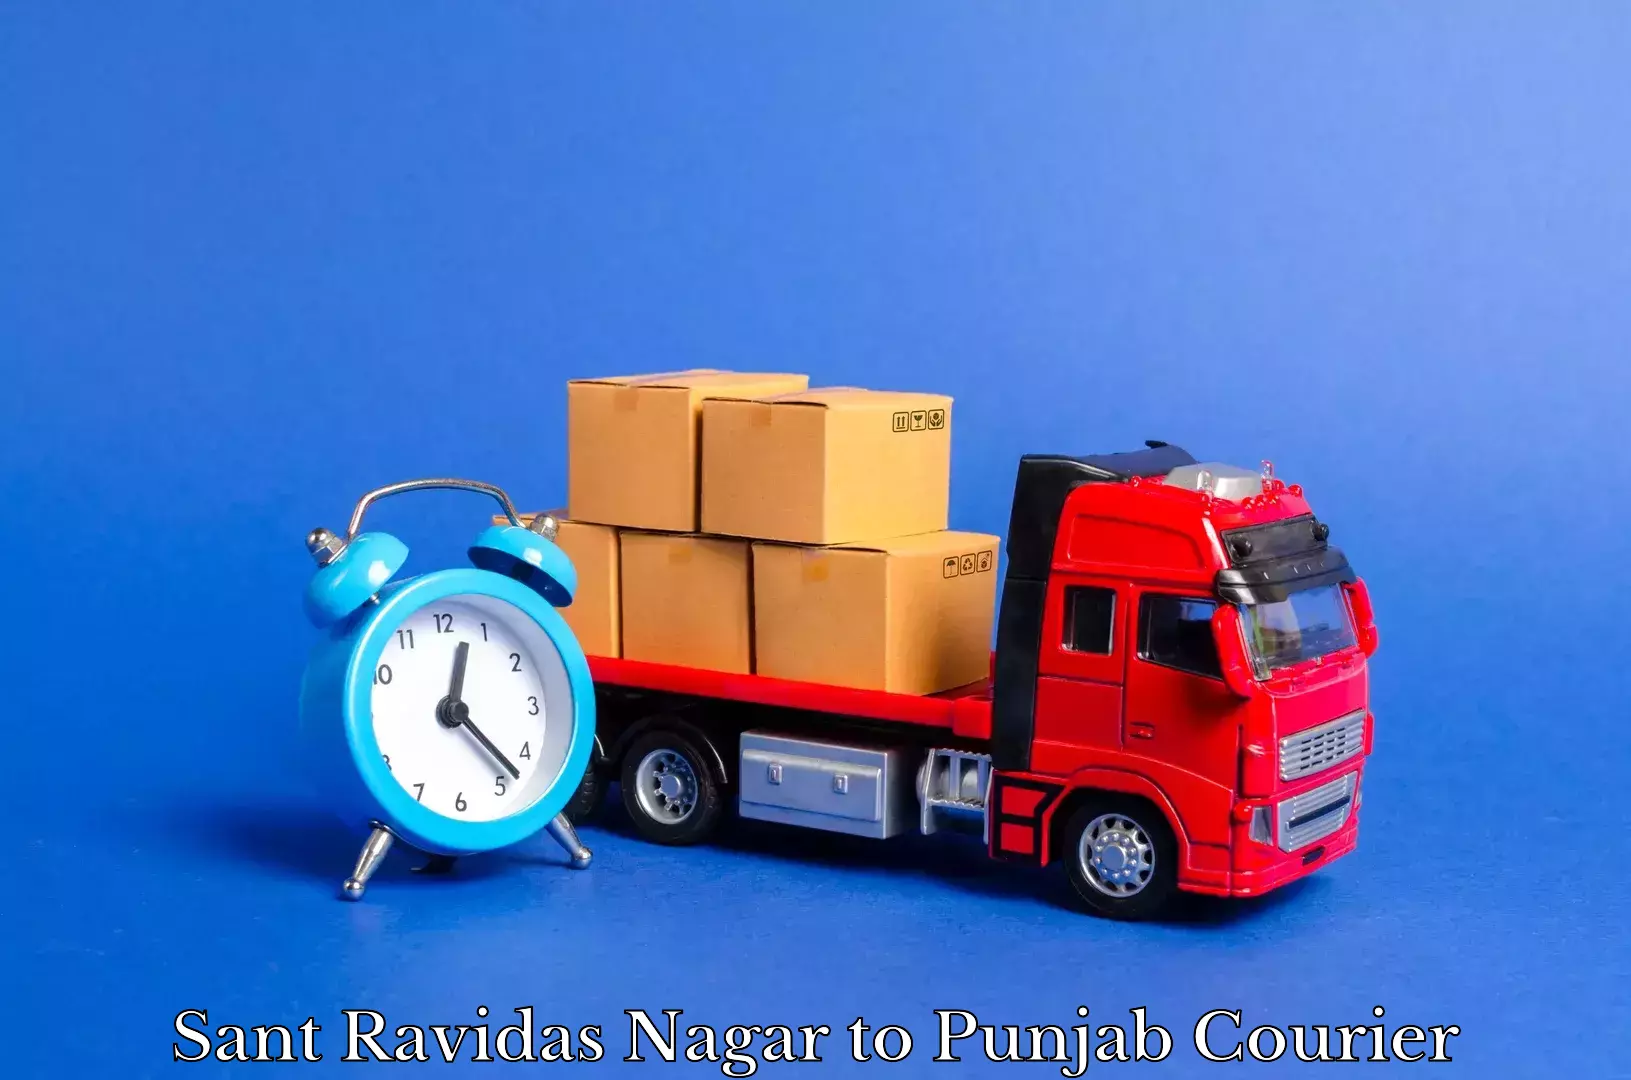 Quality moving company Sant Ravidas Nagar to Punjab